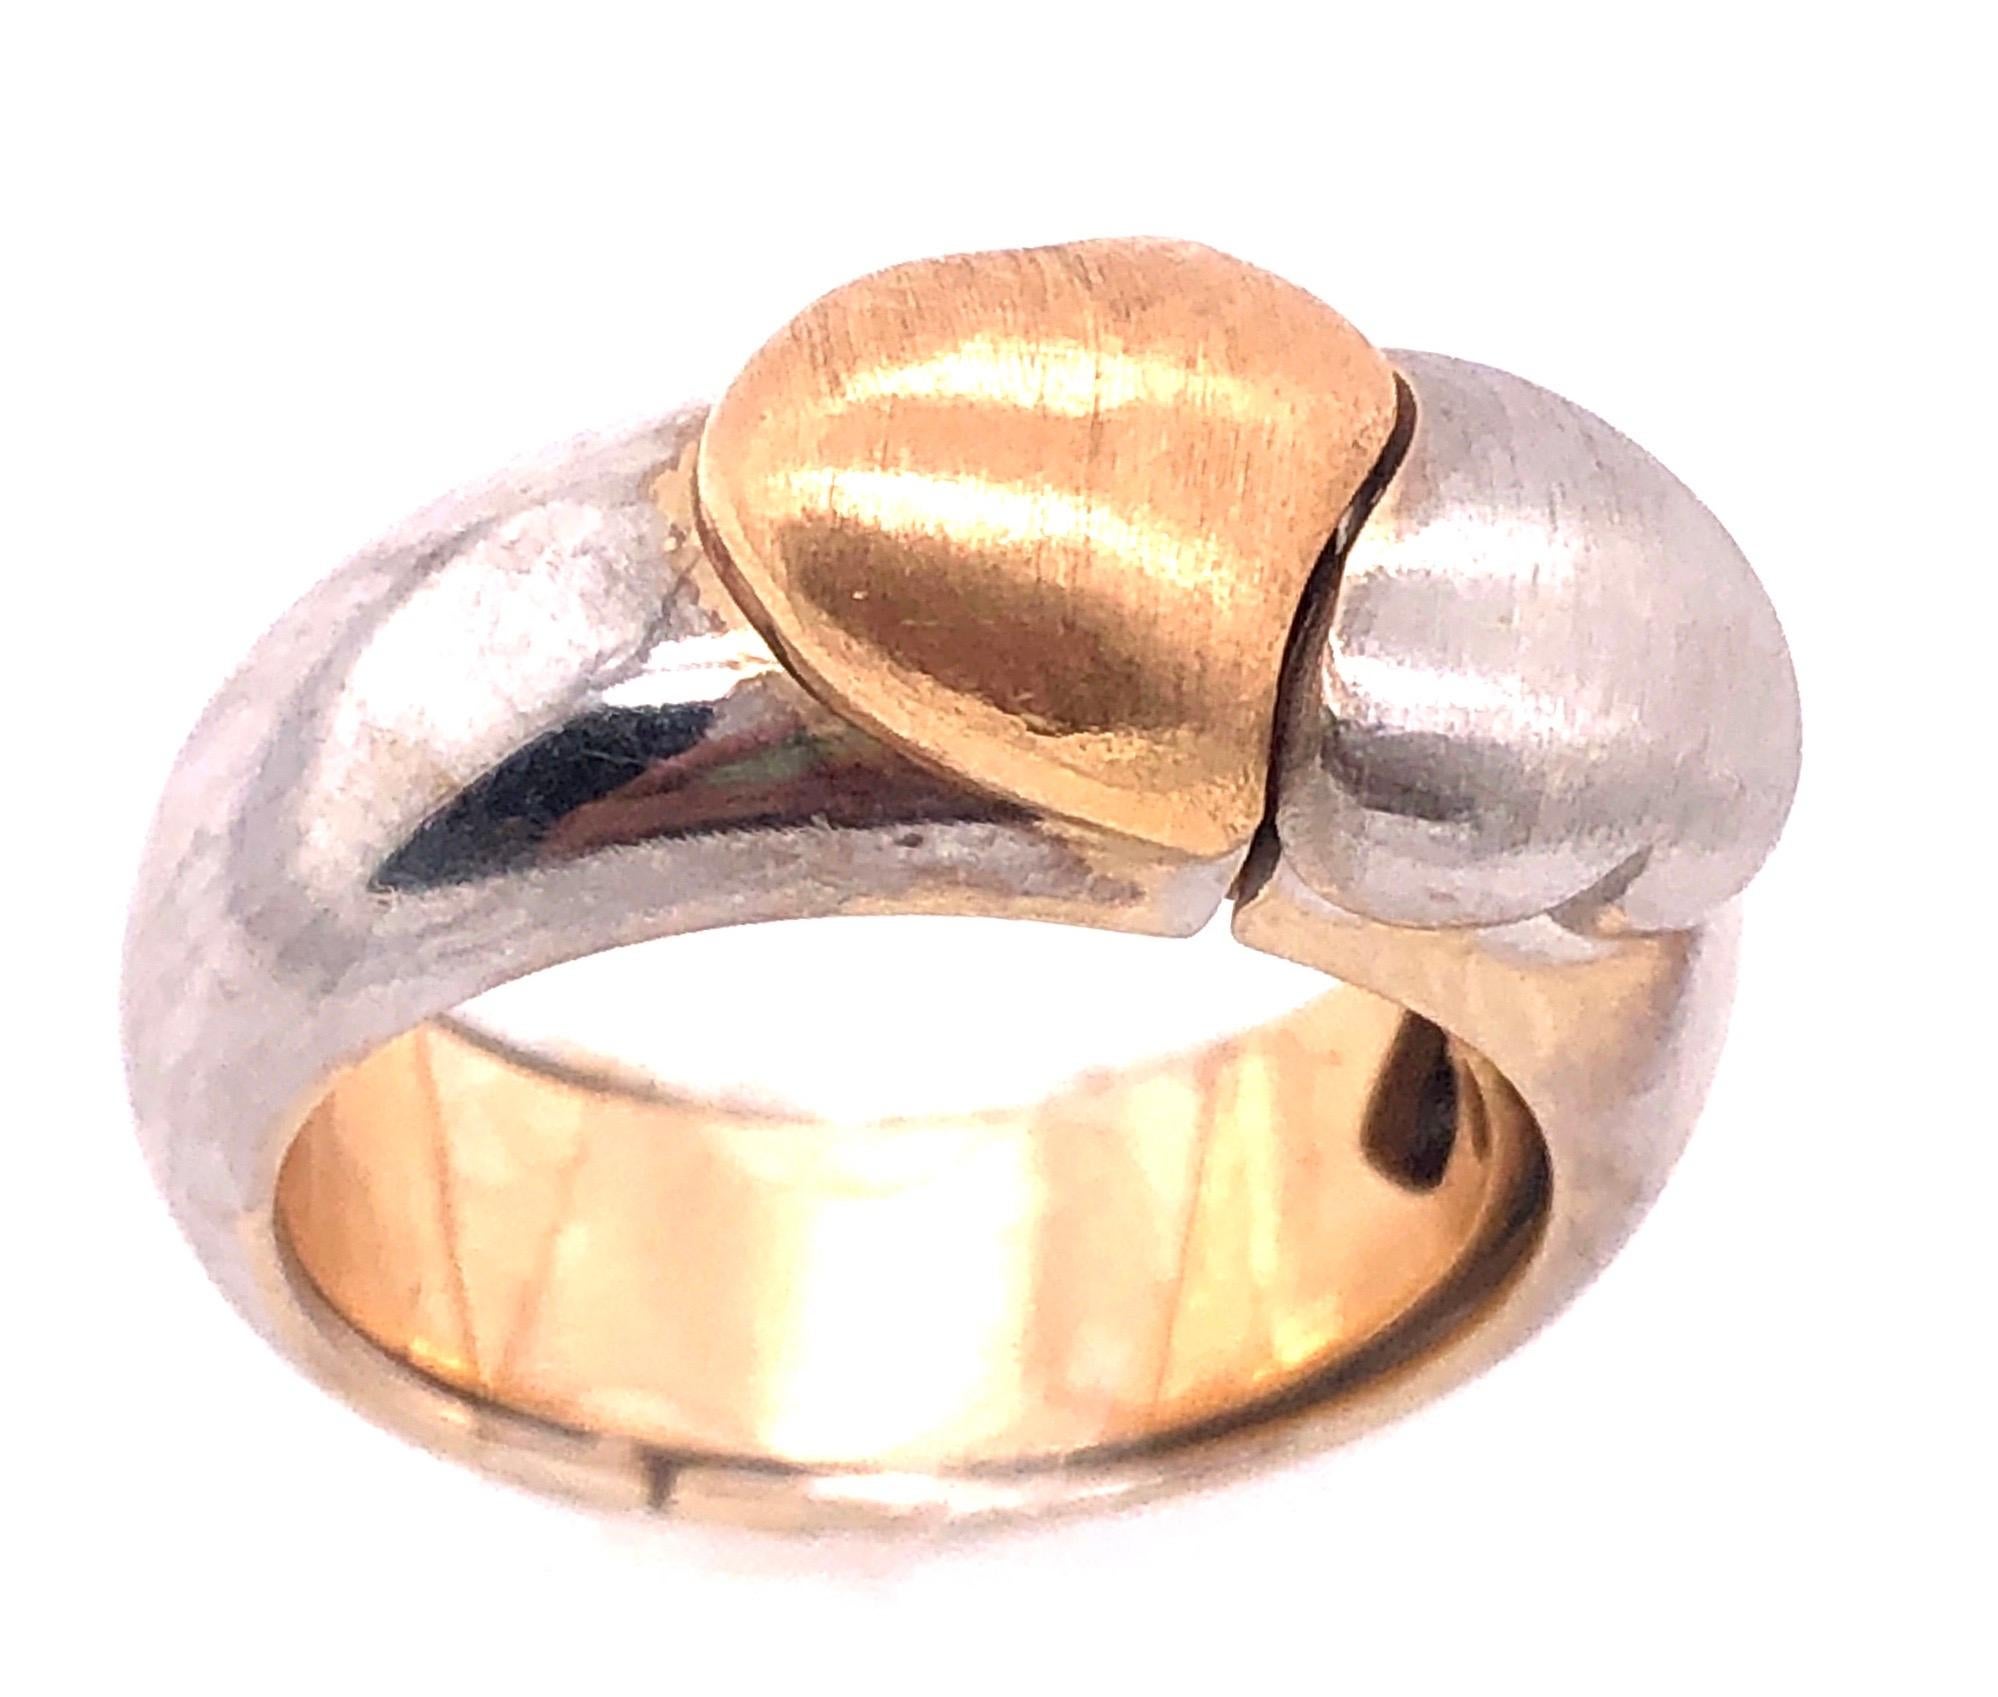 18 Karat Two Tone Matte Gold Heart Fashion Ring.
Size 4.75
10.67 grams total weight.